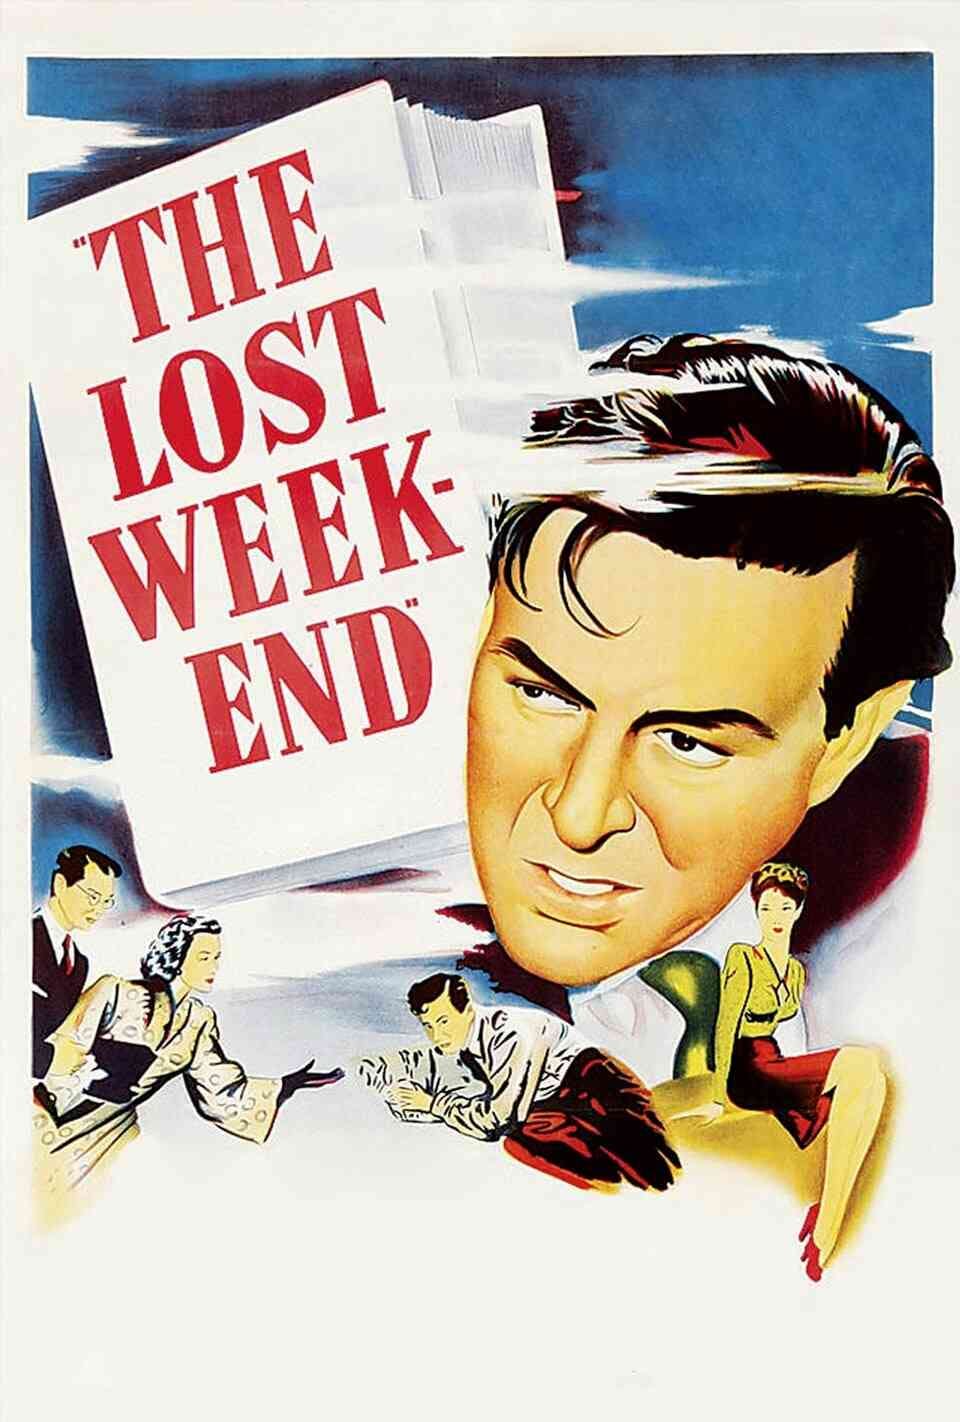 Read The Lost Weekend screenplay.